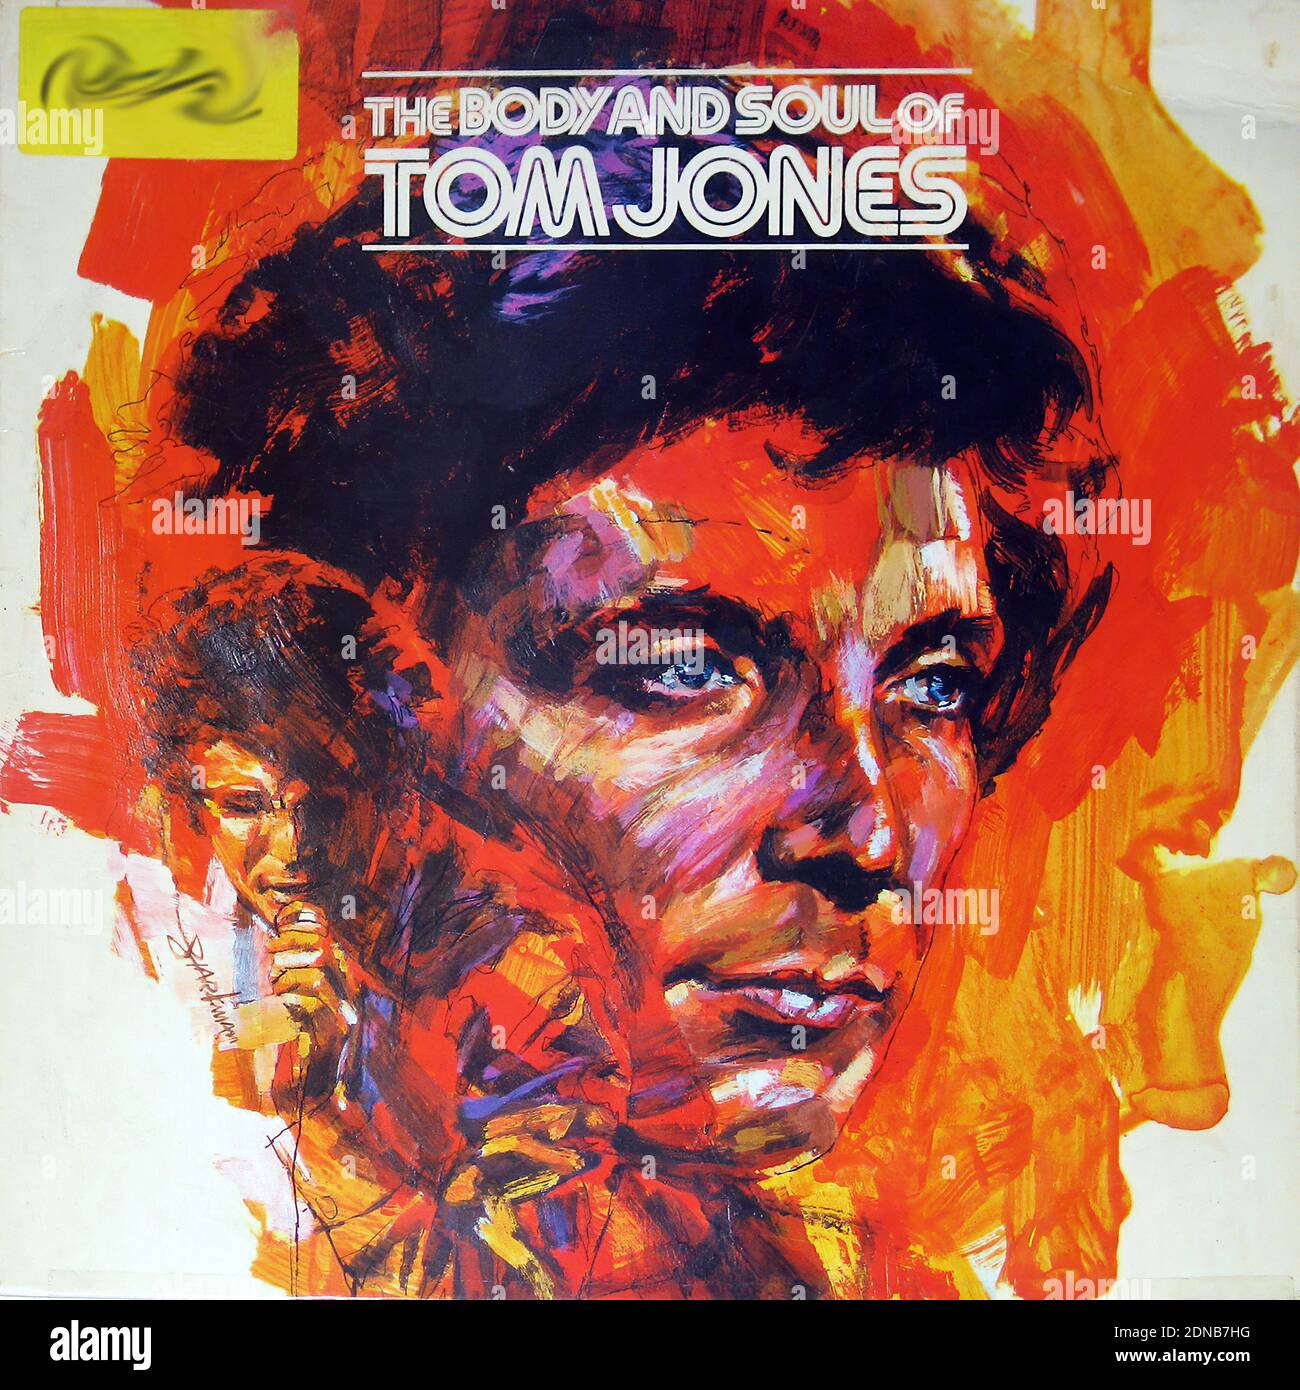 Tom Jones   The Body and Soul of Tom Jones  - Vintage Vinyl Record Cover Stock Photo